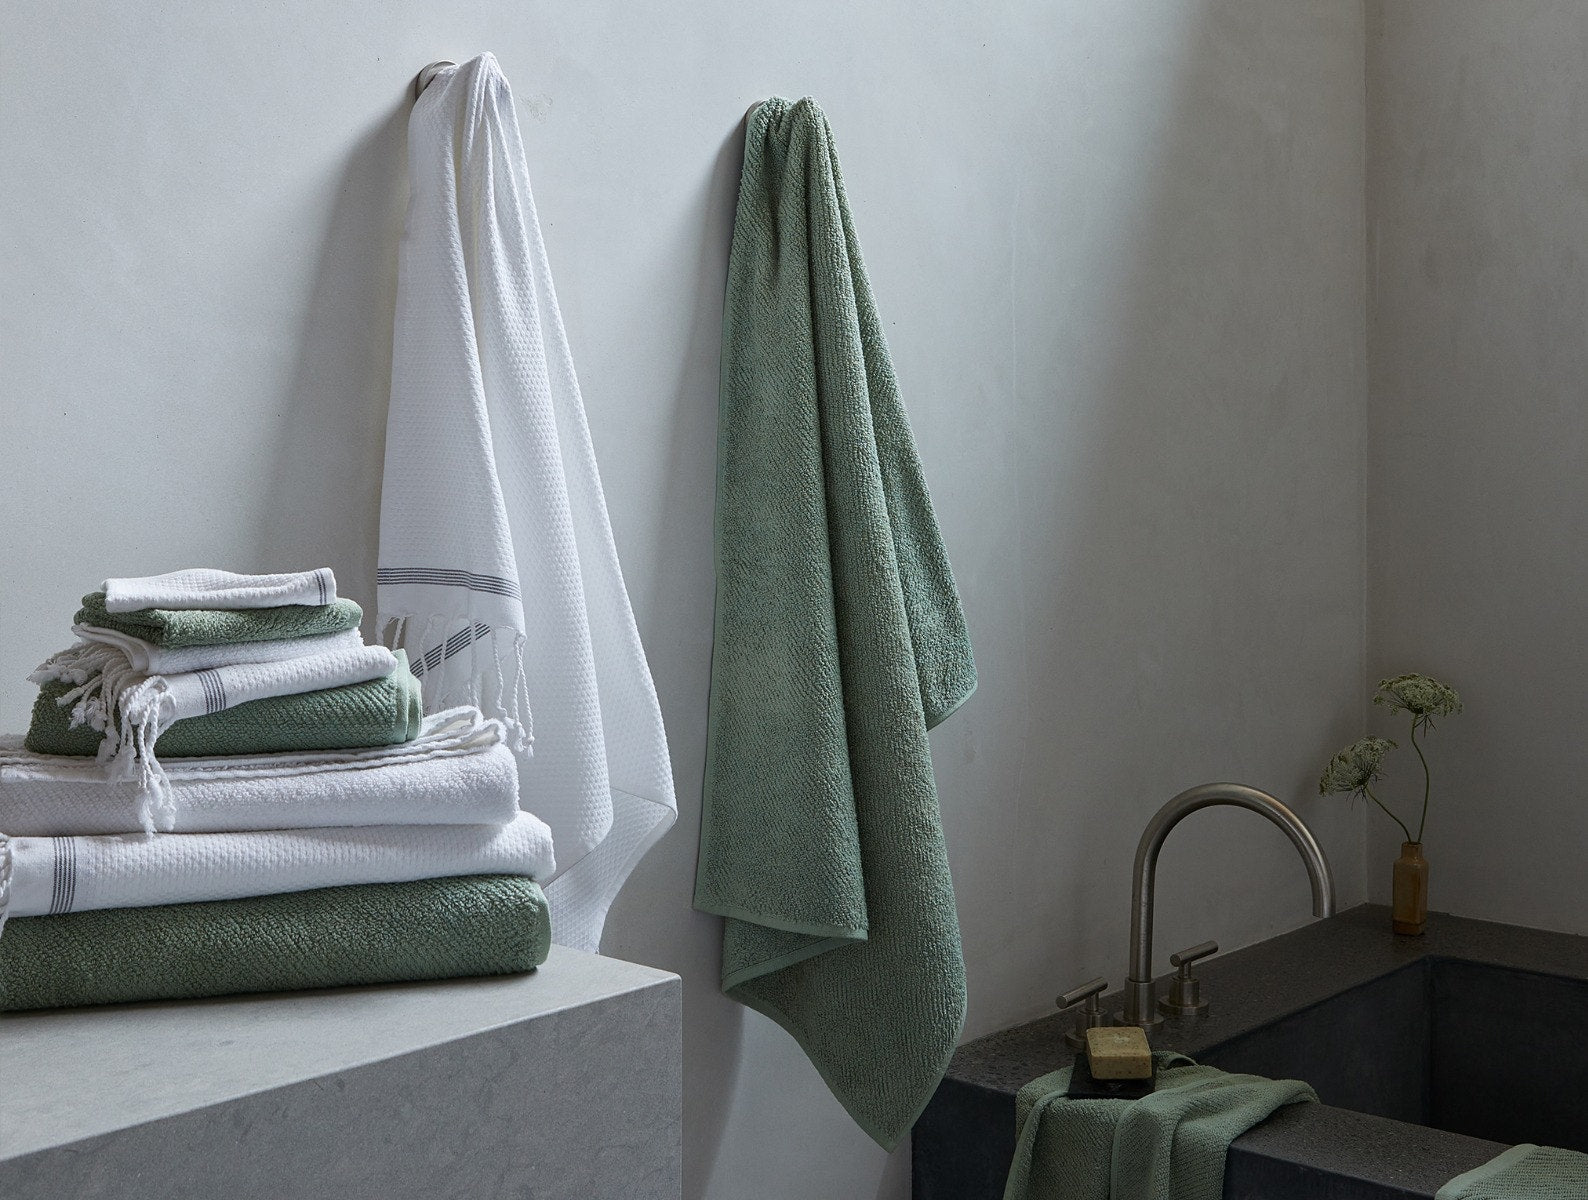 Bath Towel Sets in Bath Towels